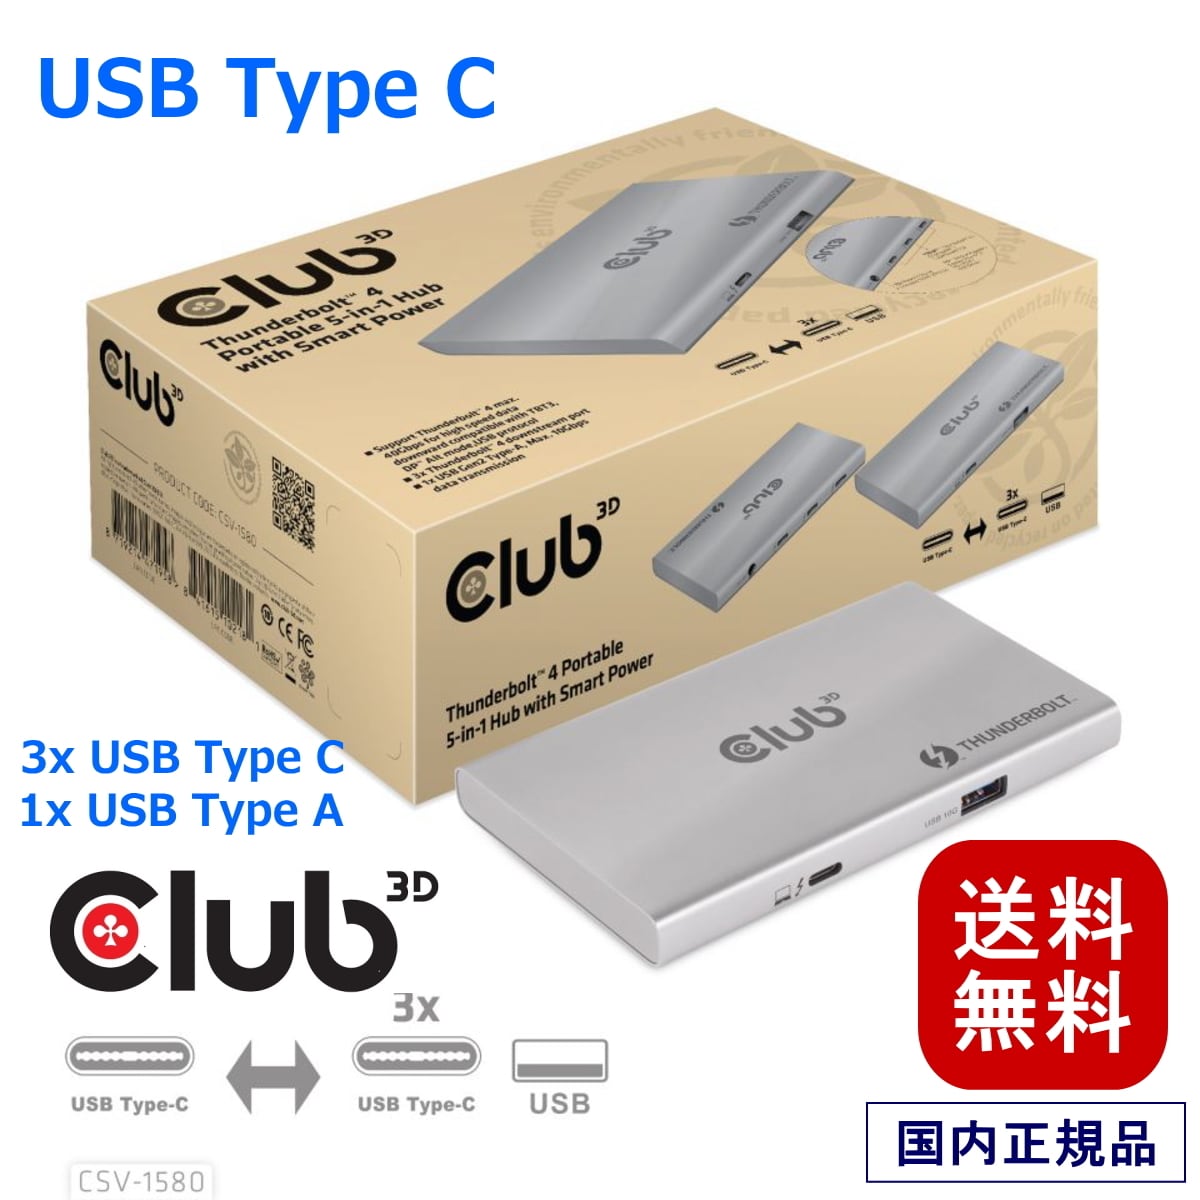 USB C ハブ 5-IN-1 タイプC ハブ HDMI 4K@60Hz